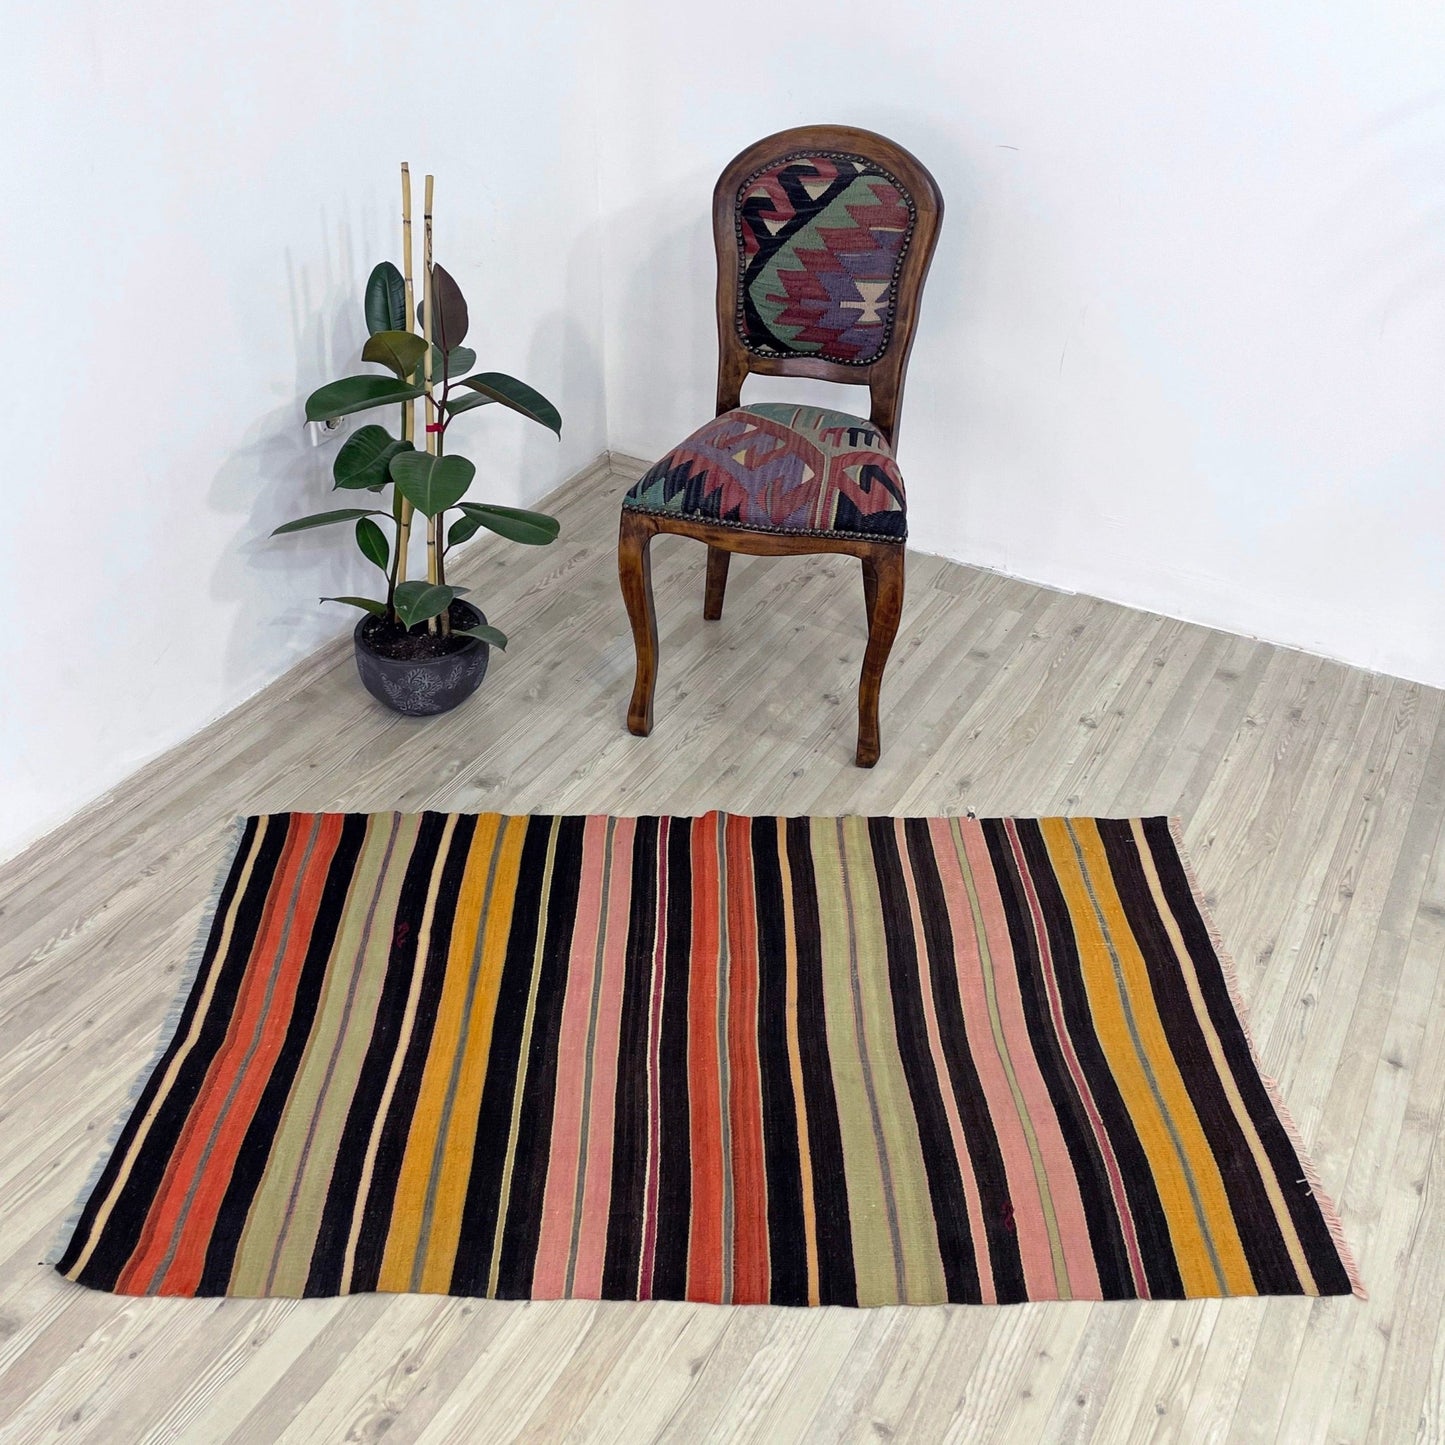 turkish kilim rug shopping online rug store door mat bathmat san francsco bay area palo alto california berkeley